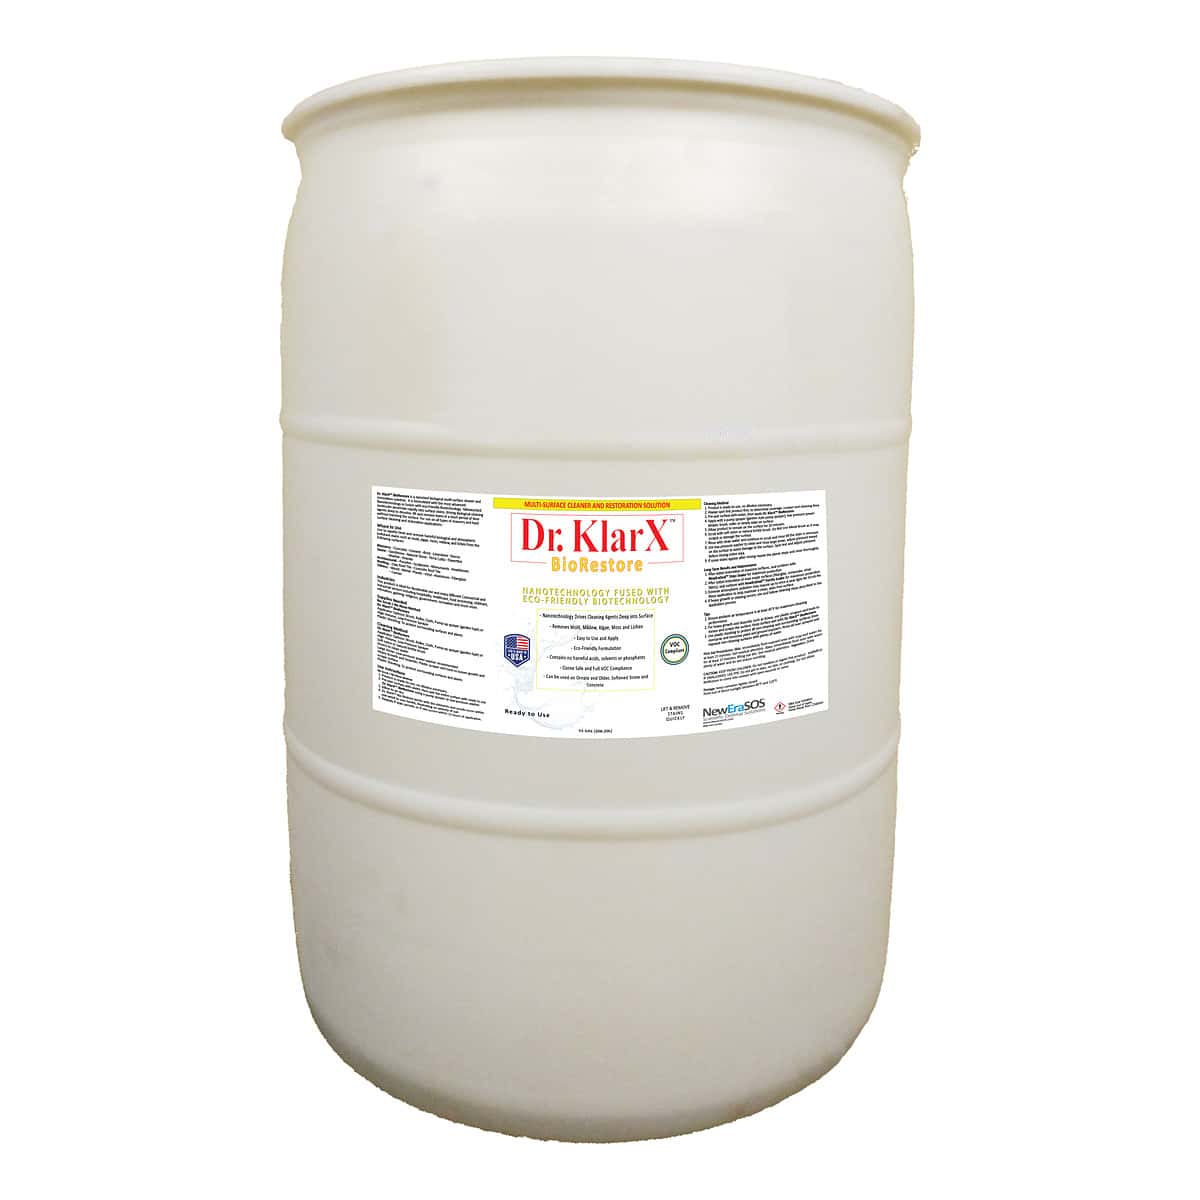 Dr KlarX BioRestore 55-Gallon Drum